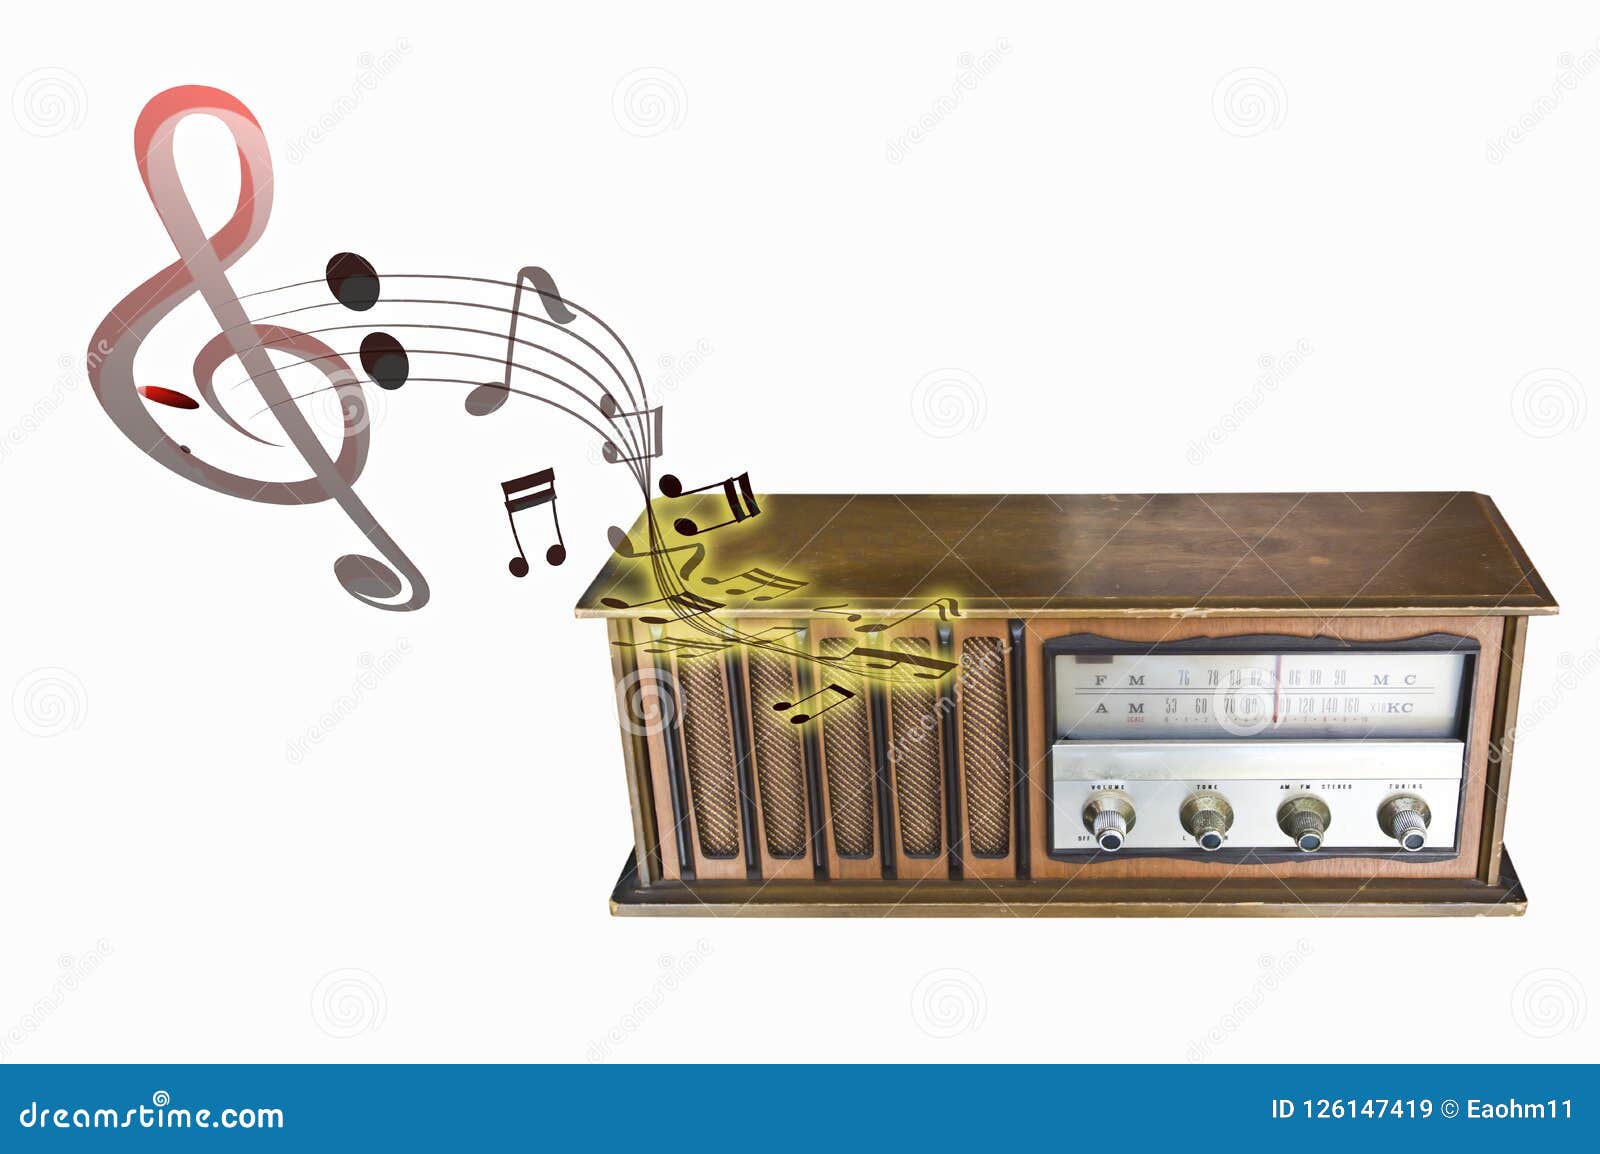 revolutie negeren Noordoosten Music Background with Retro Radio Stock Image - Image of radio, music:  126147419